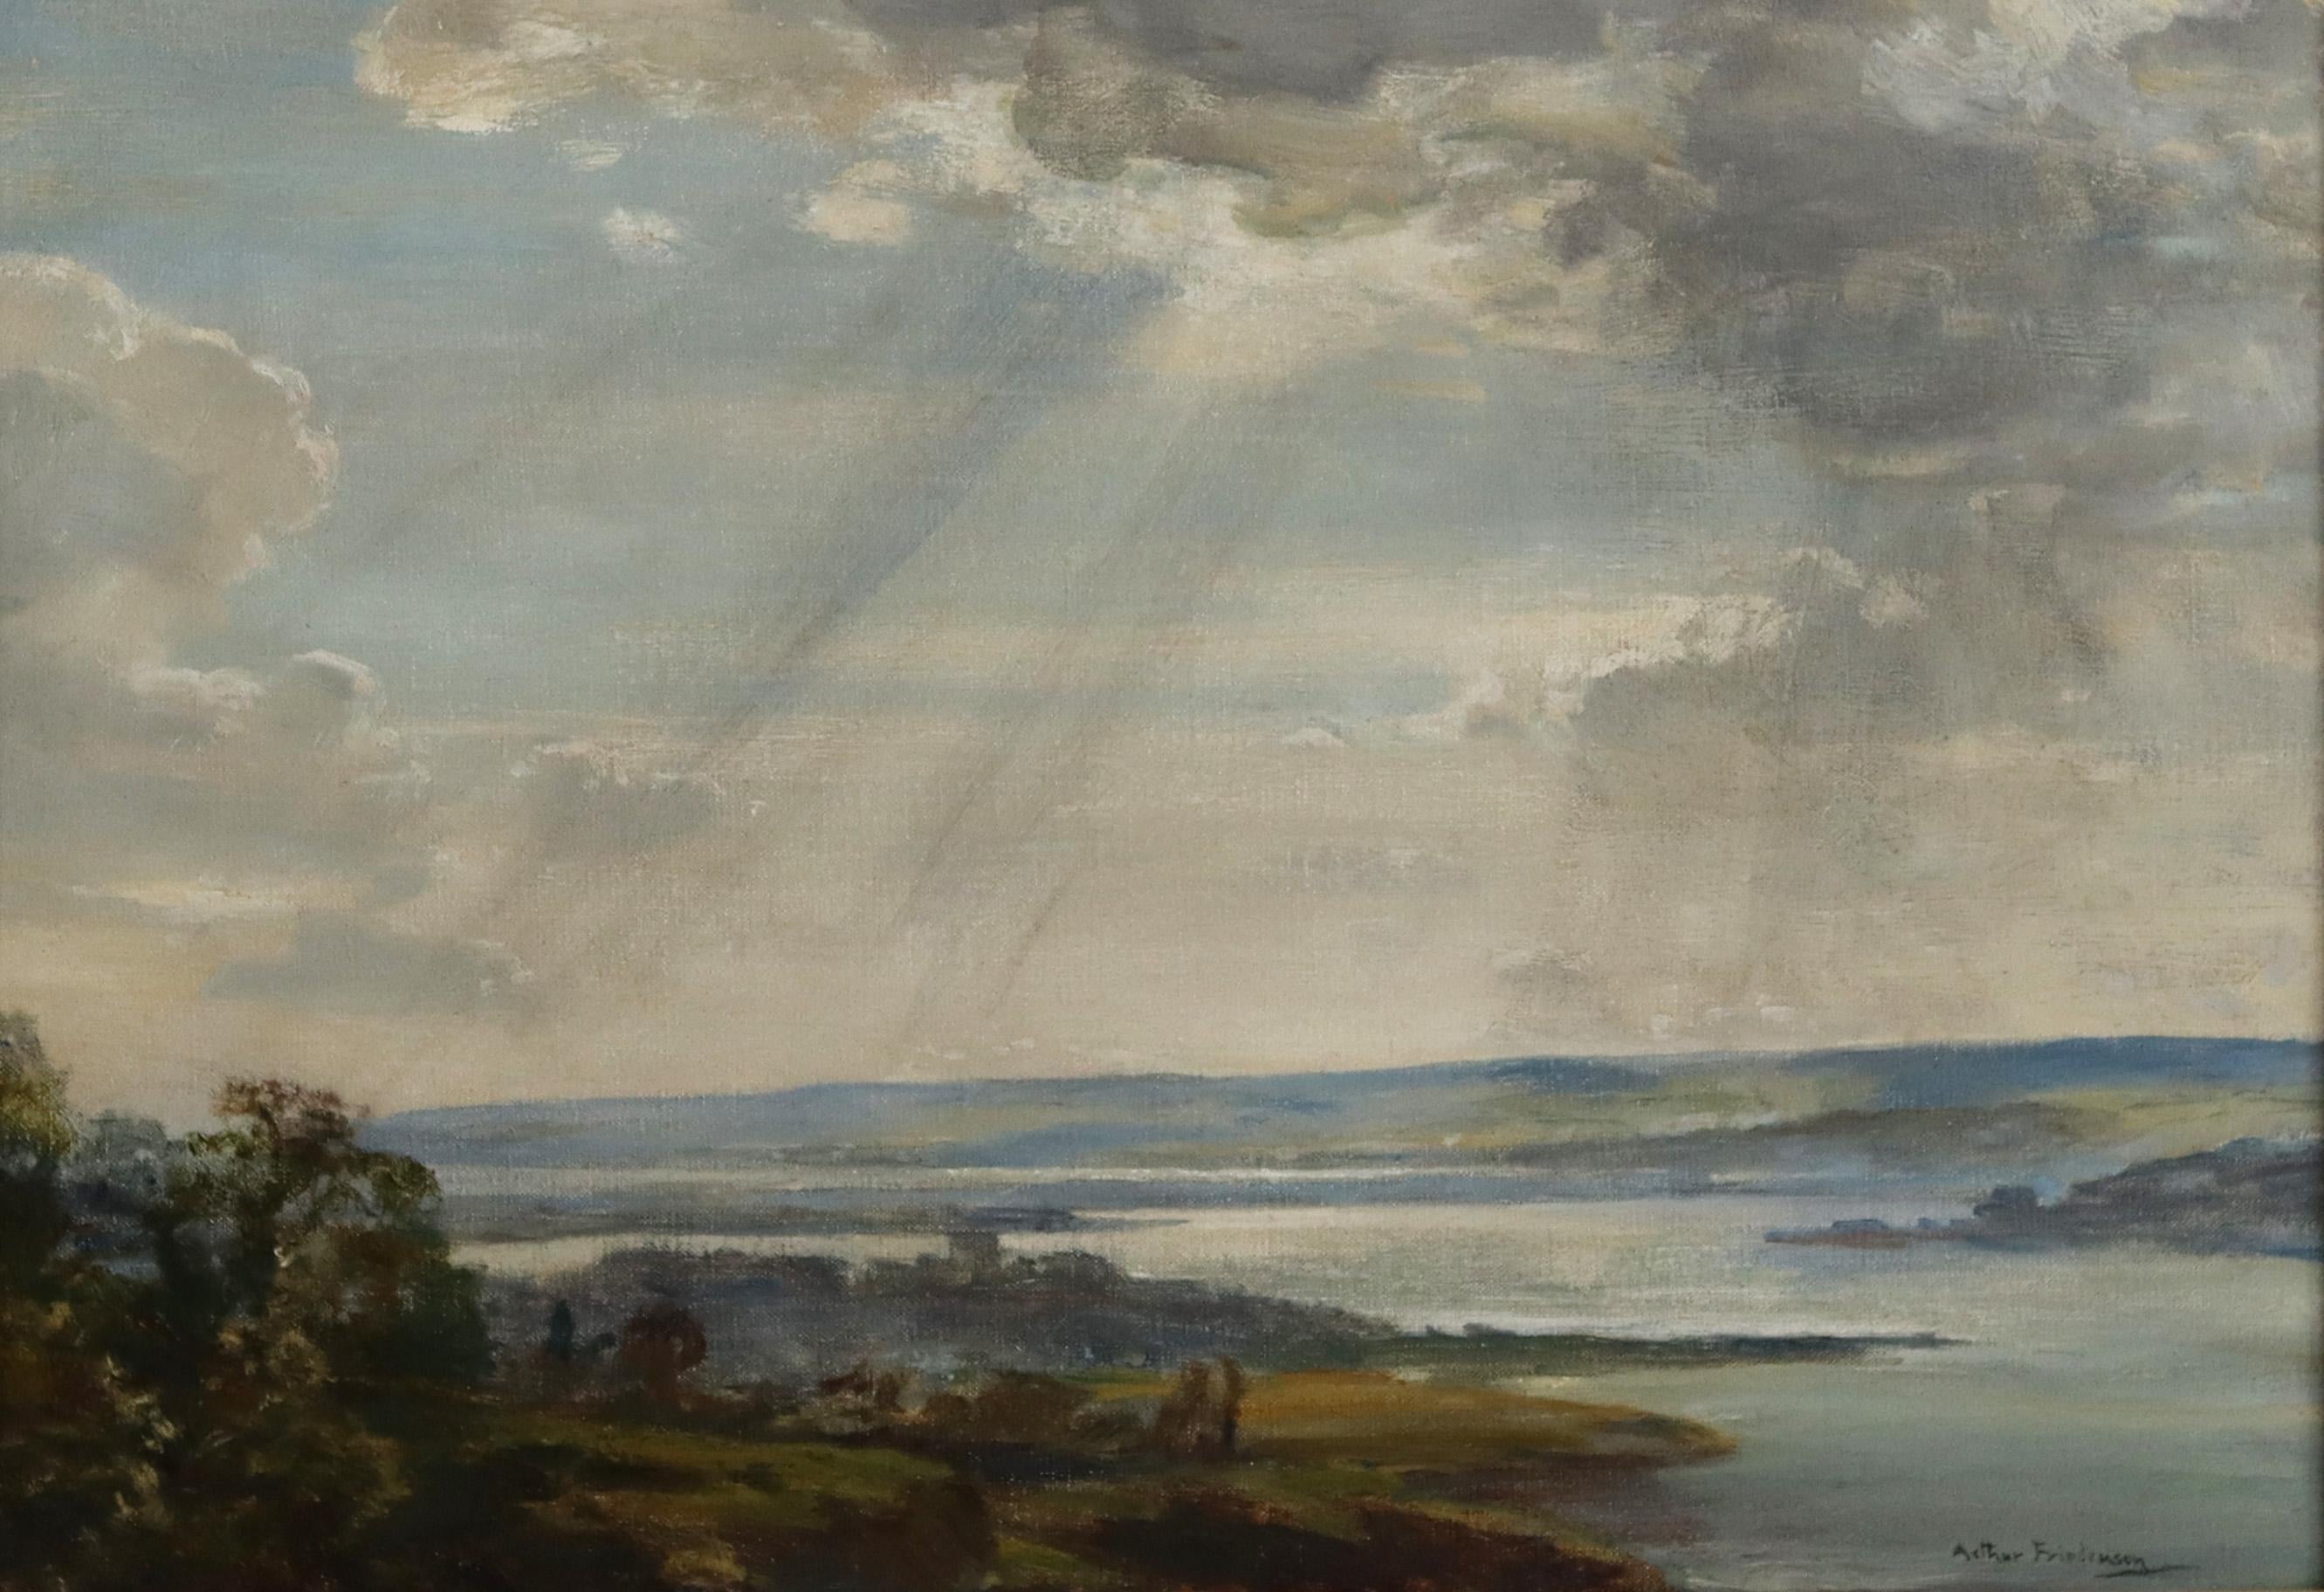 Poole Harbour - Painting by Arthur A. Friedenson